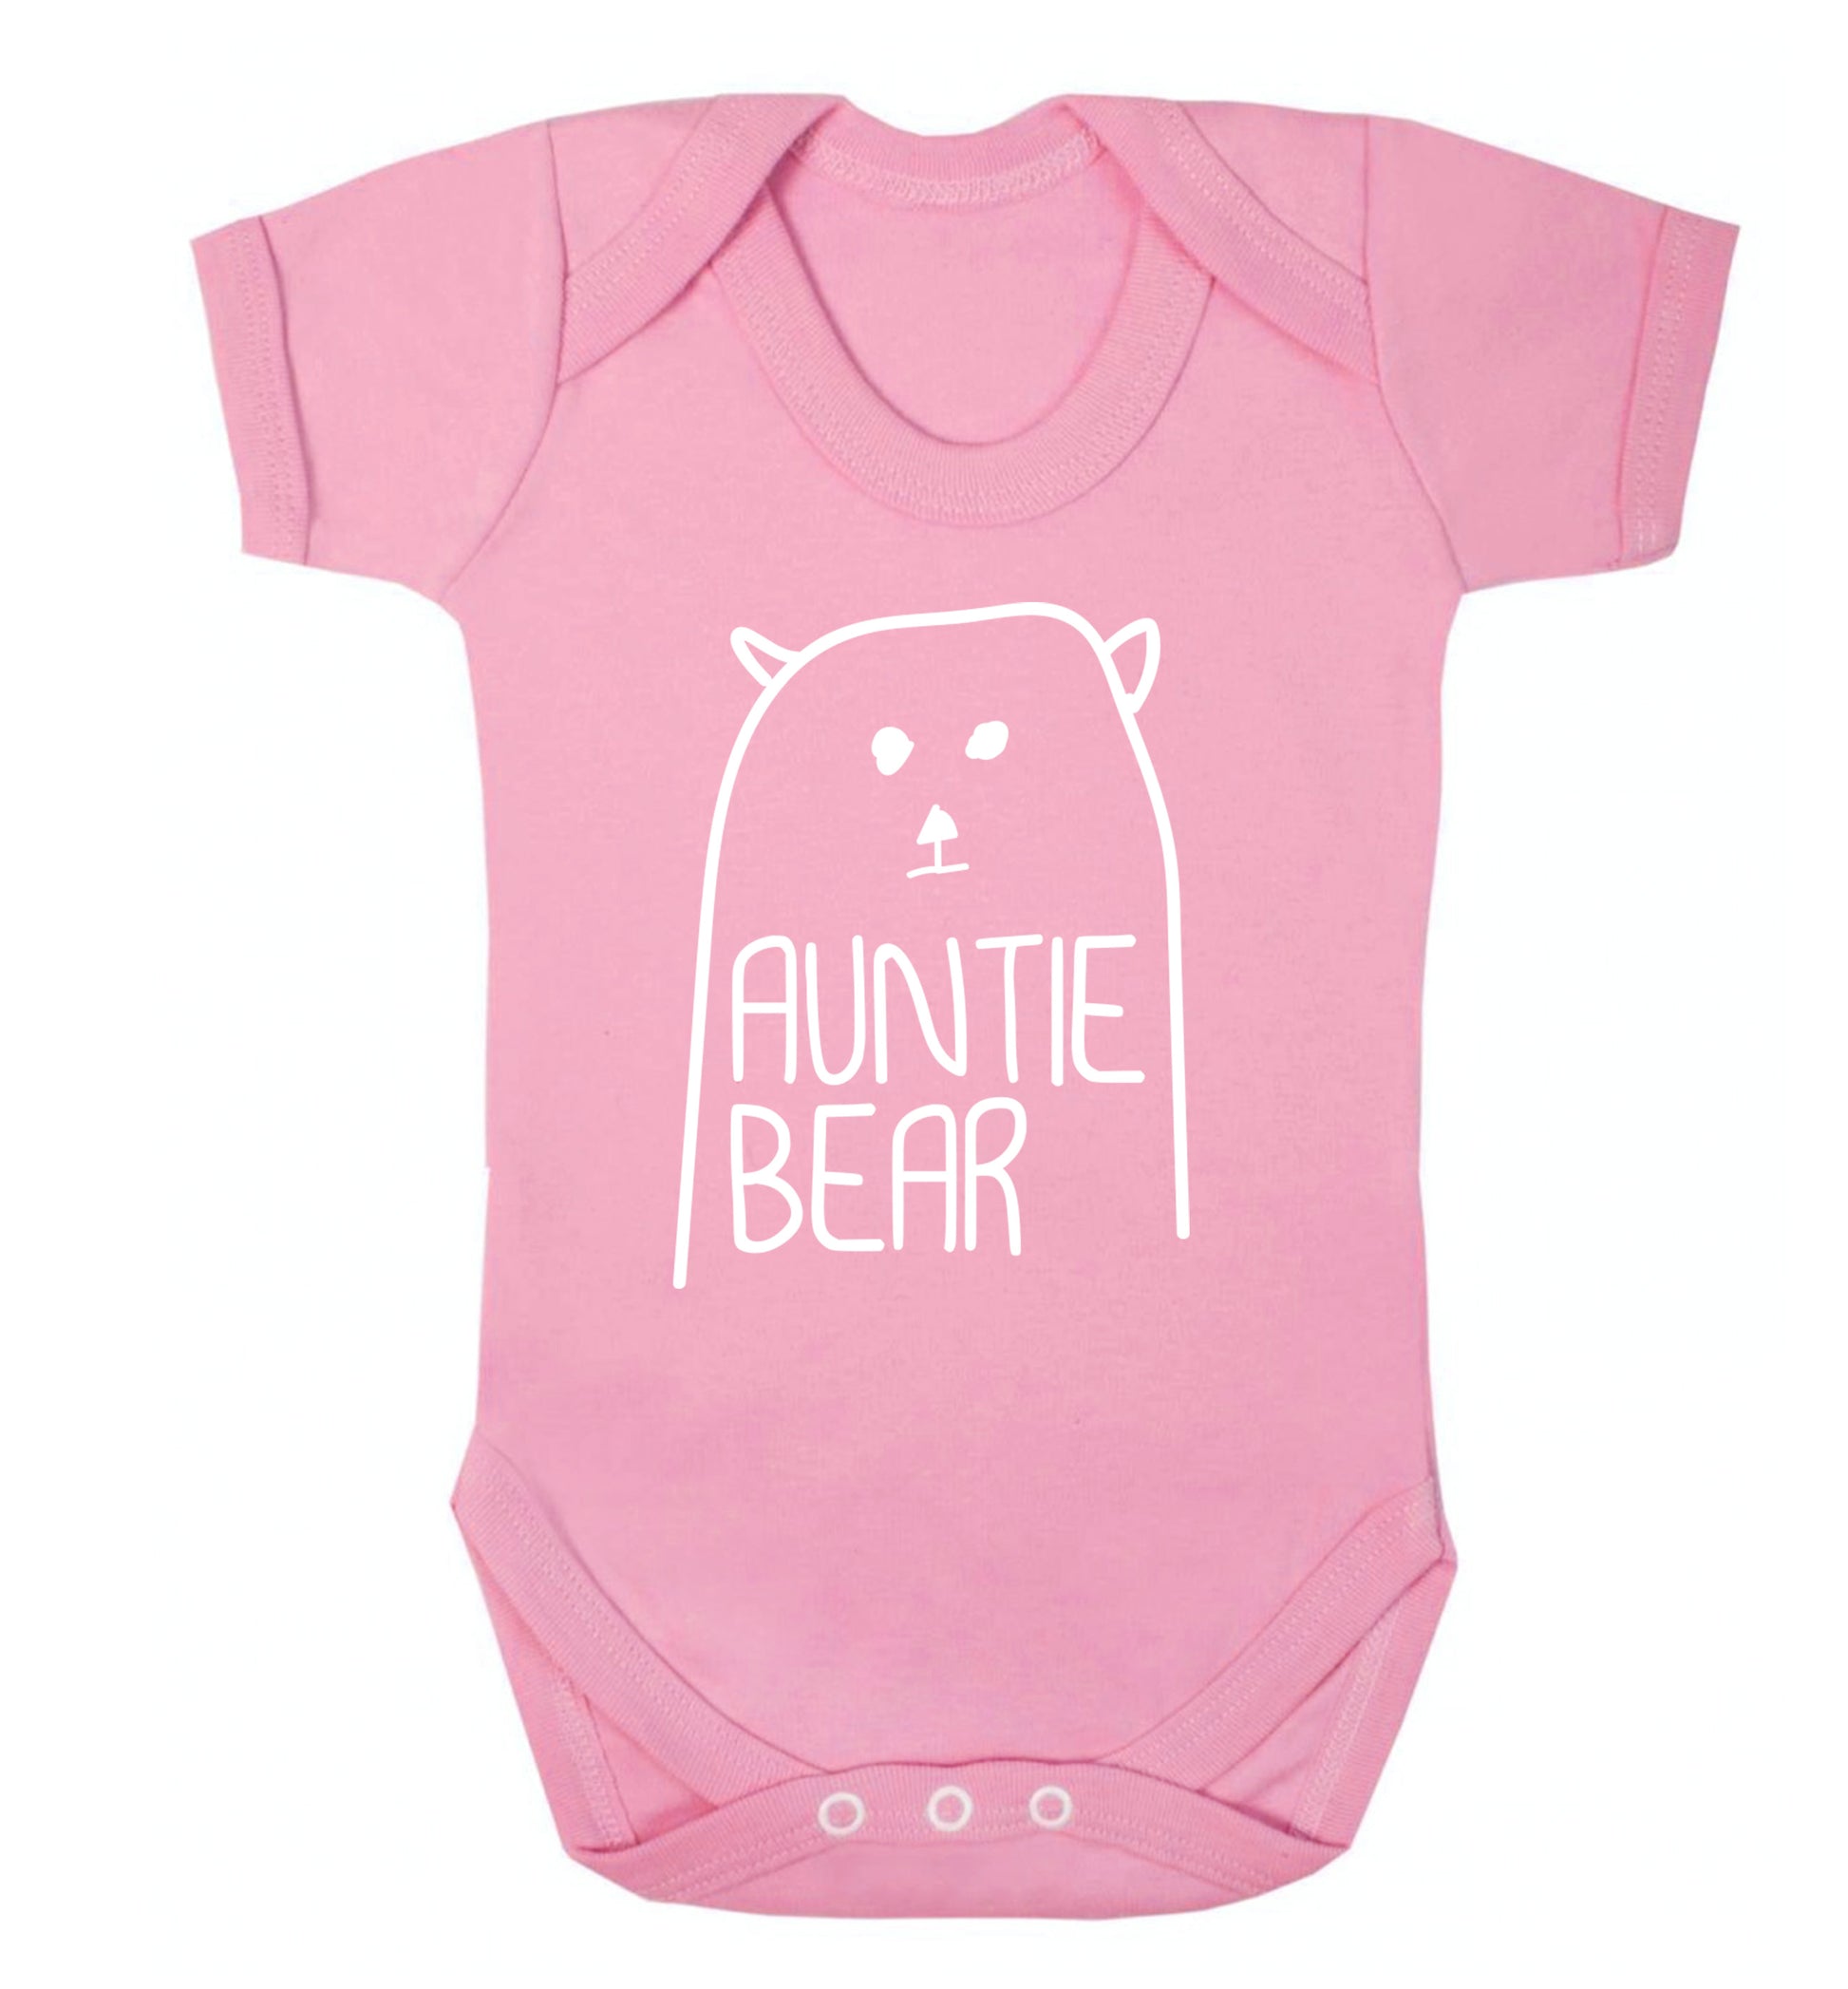 Auntie bear Baby Vest pale pink 18-24 months